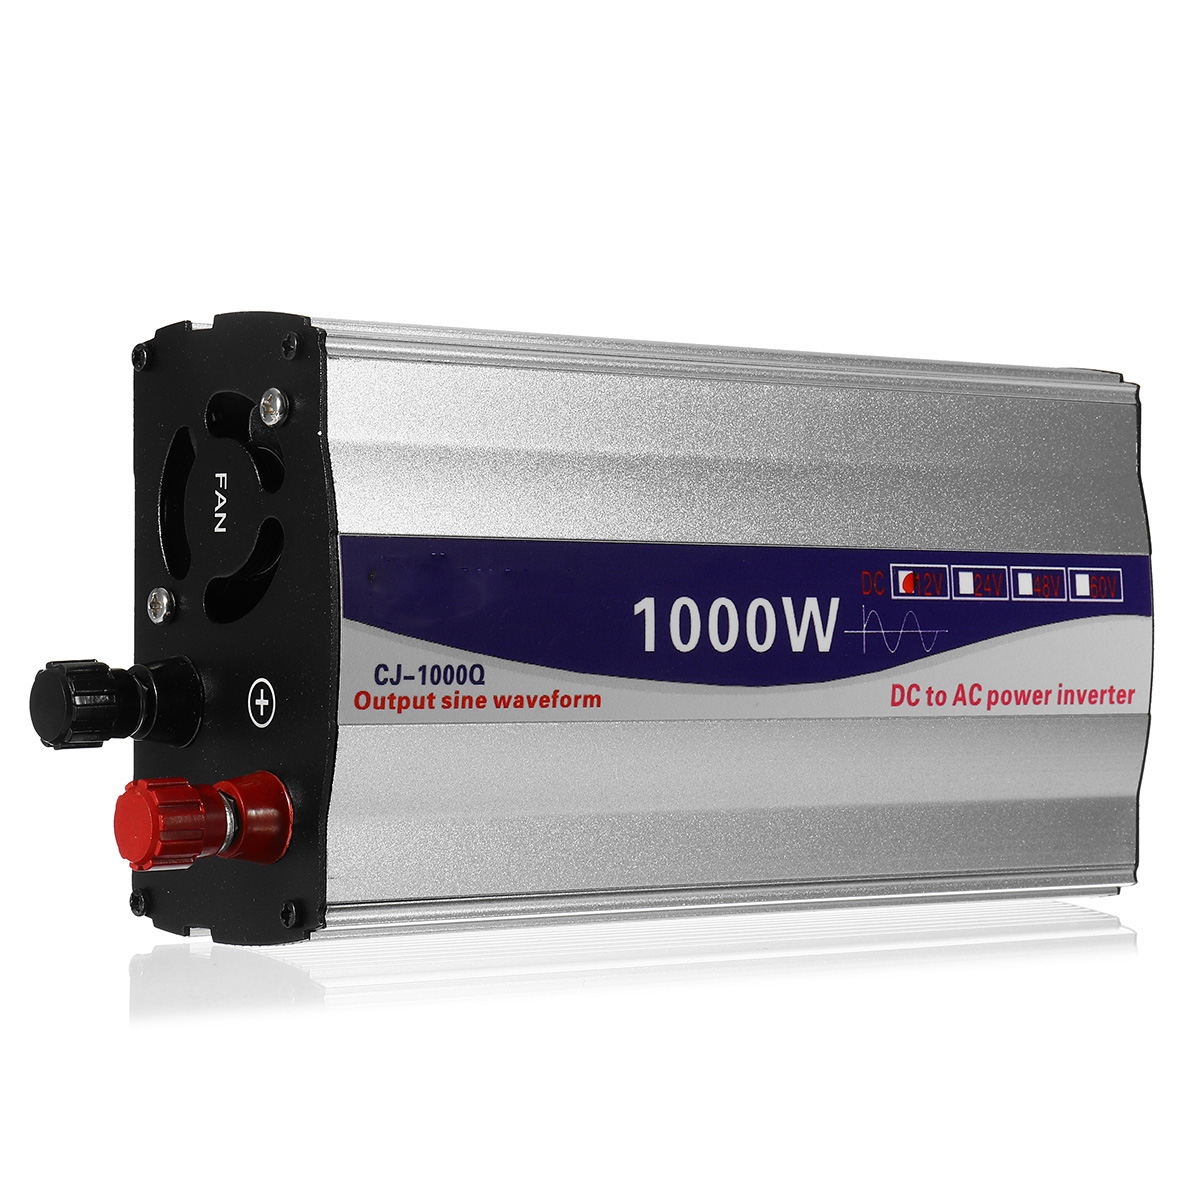 

Minleaf ML-PI2 1000W Peak 12V / 24V to 220V Pure Sine Wave Inverter Power Inverter Converter